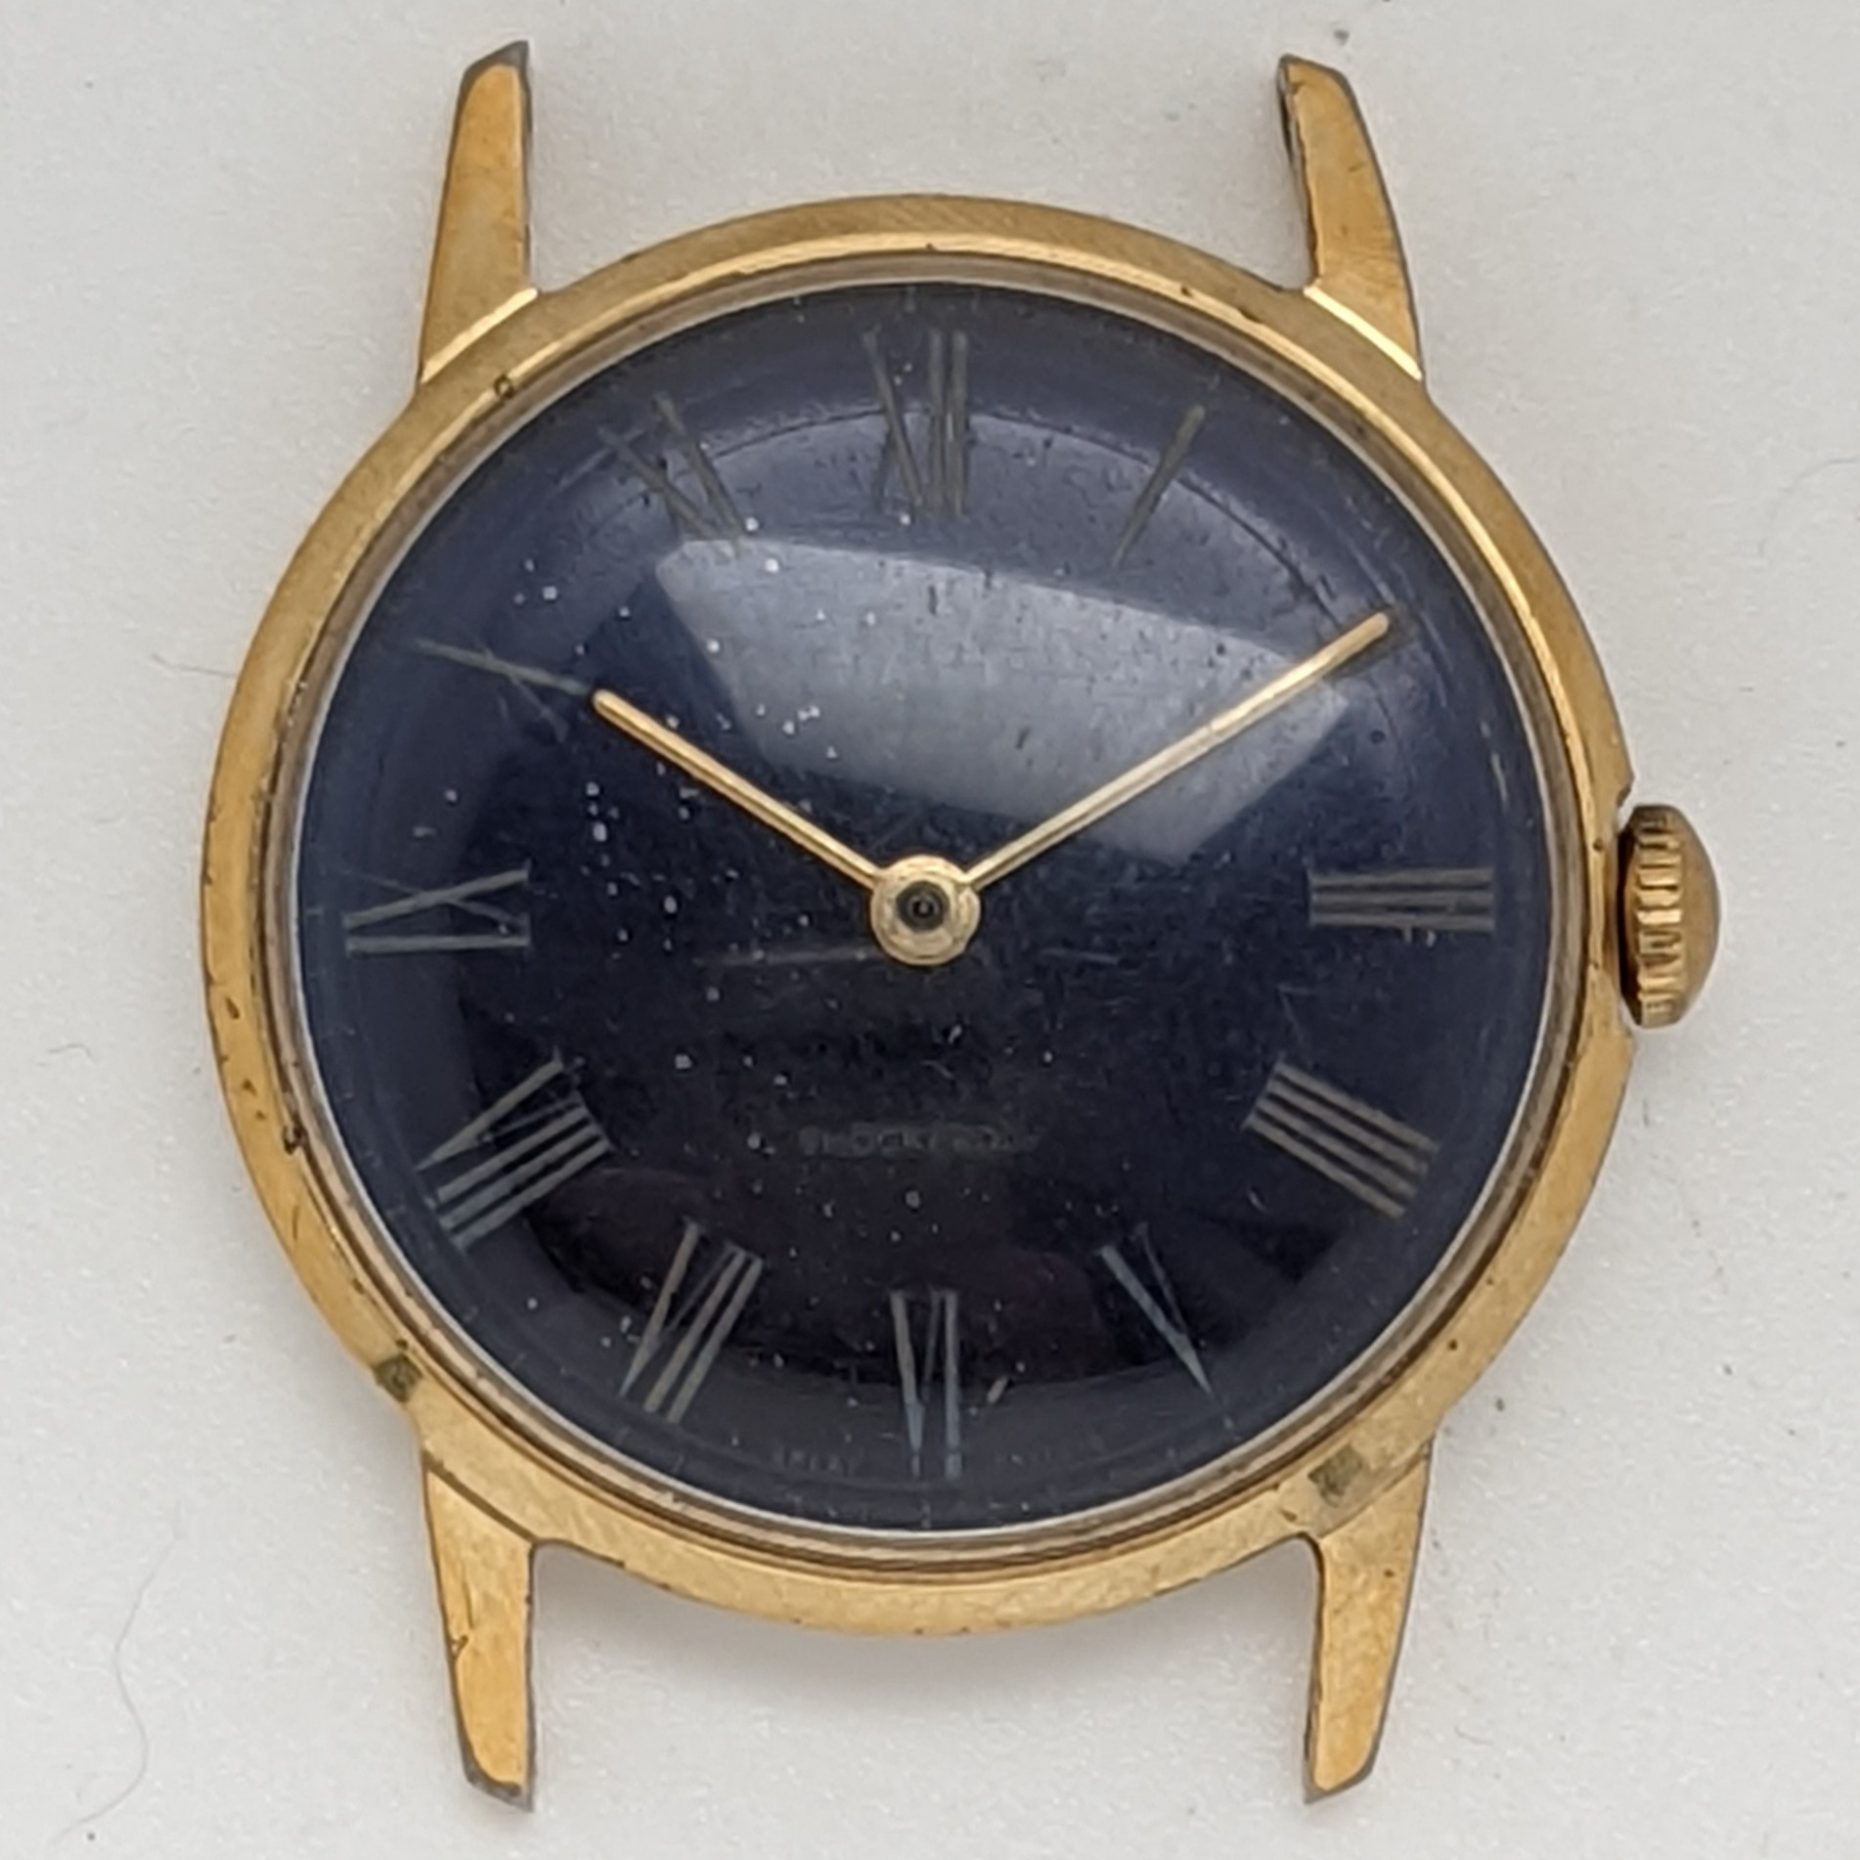 Timex Mercury 1041 2469 [1969]